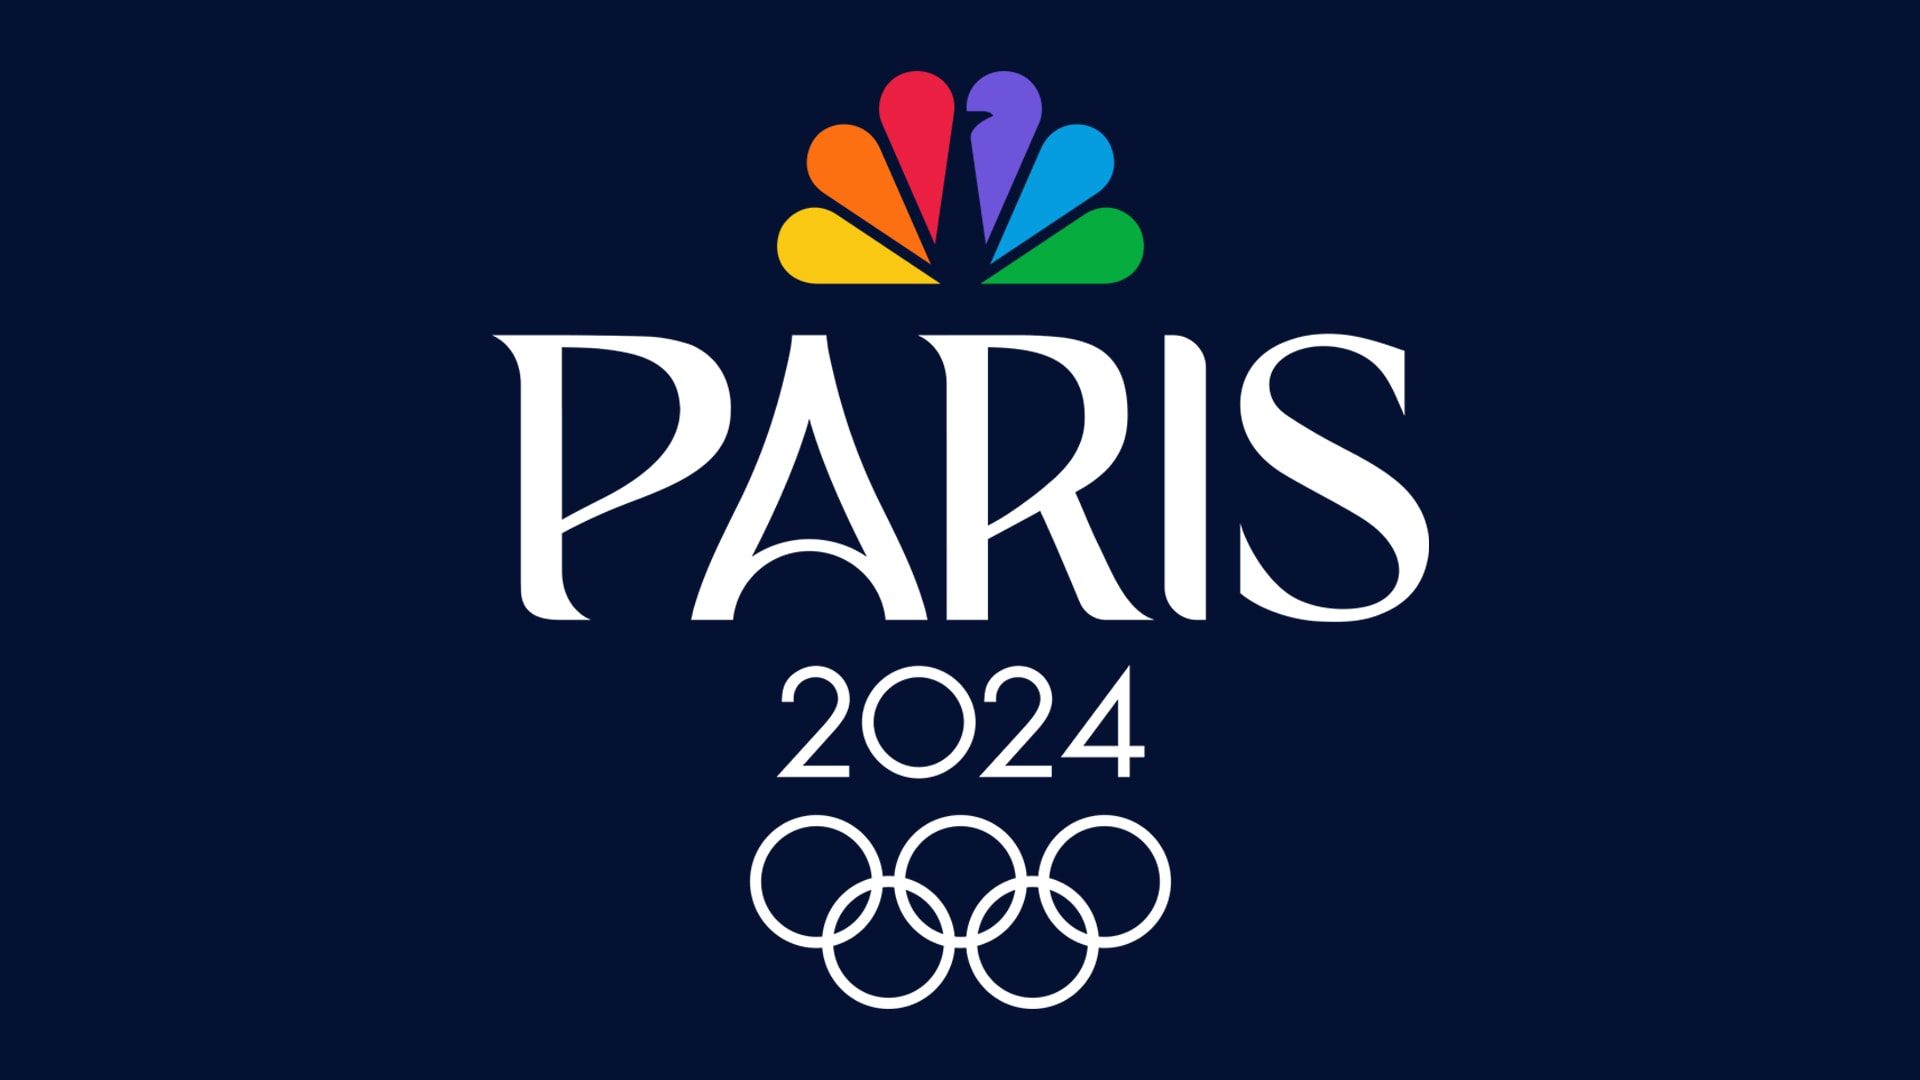 Olympics Symbol 2024